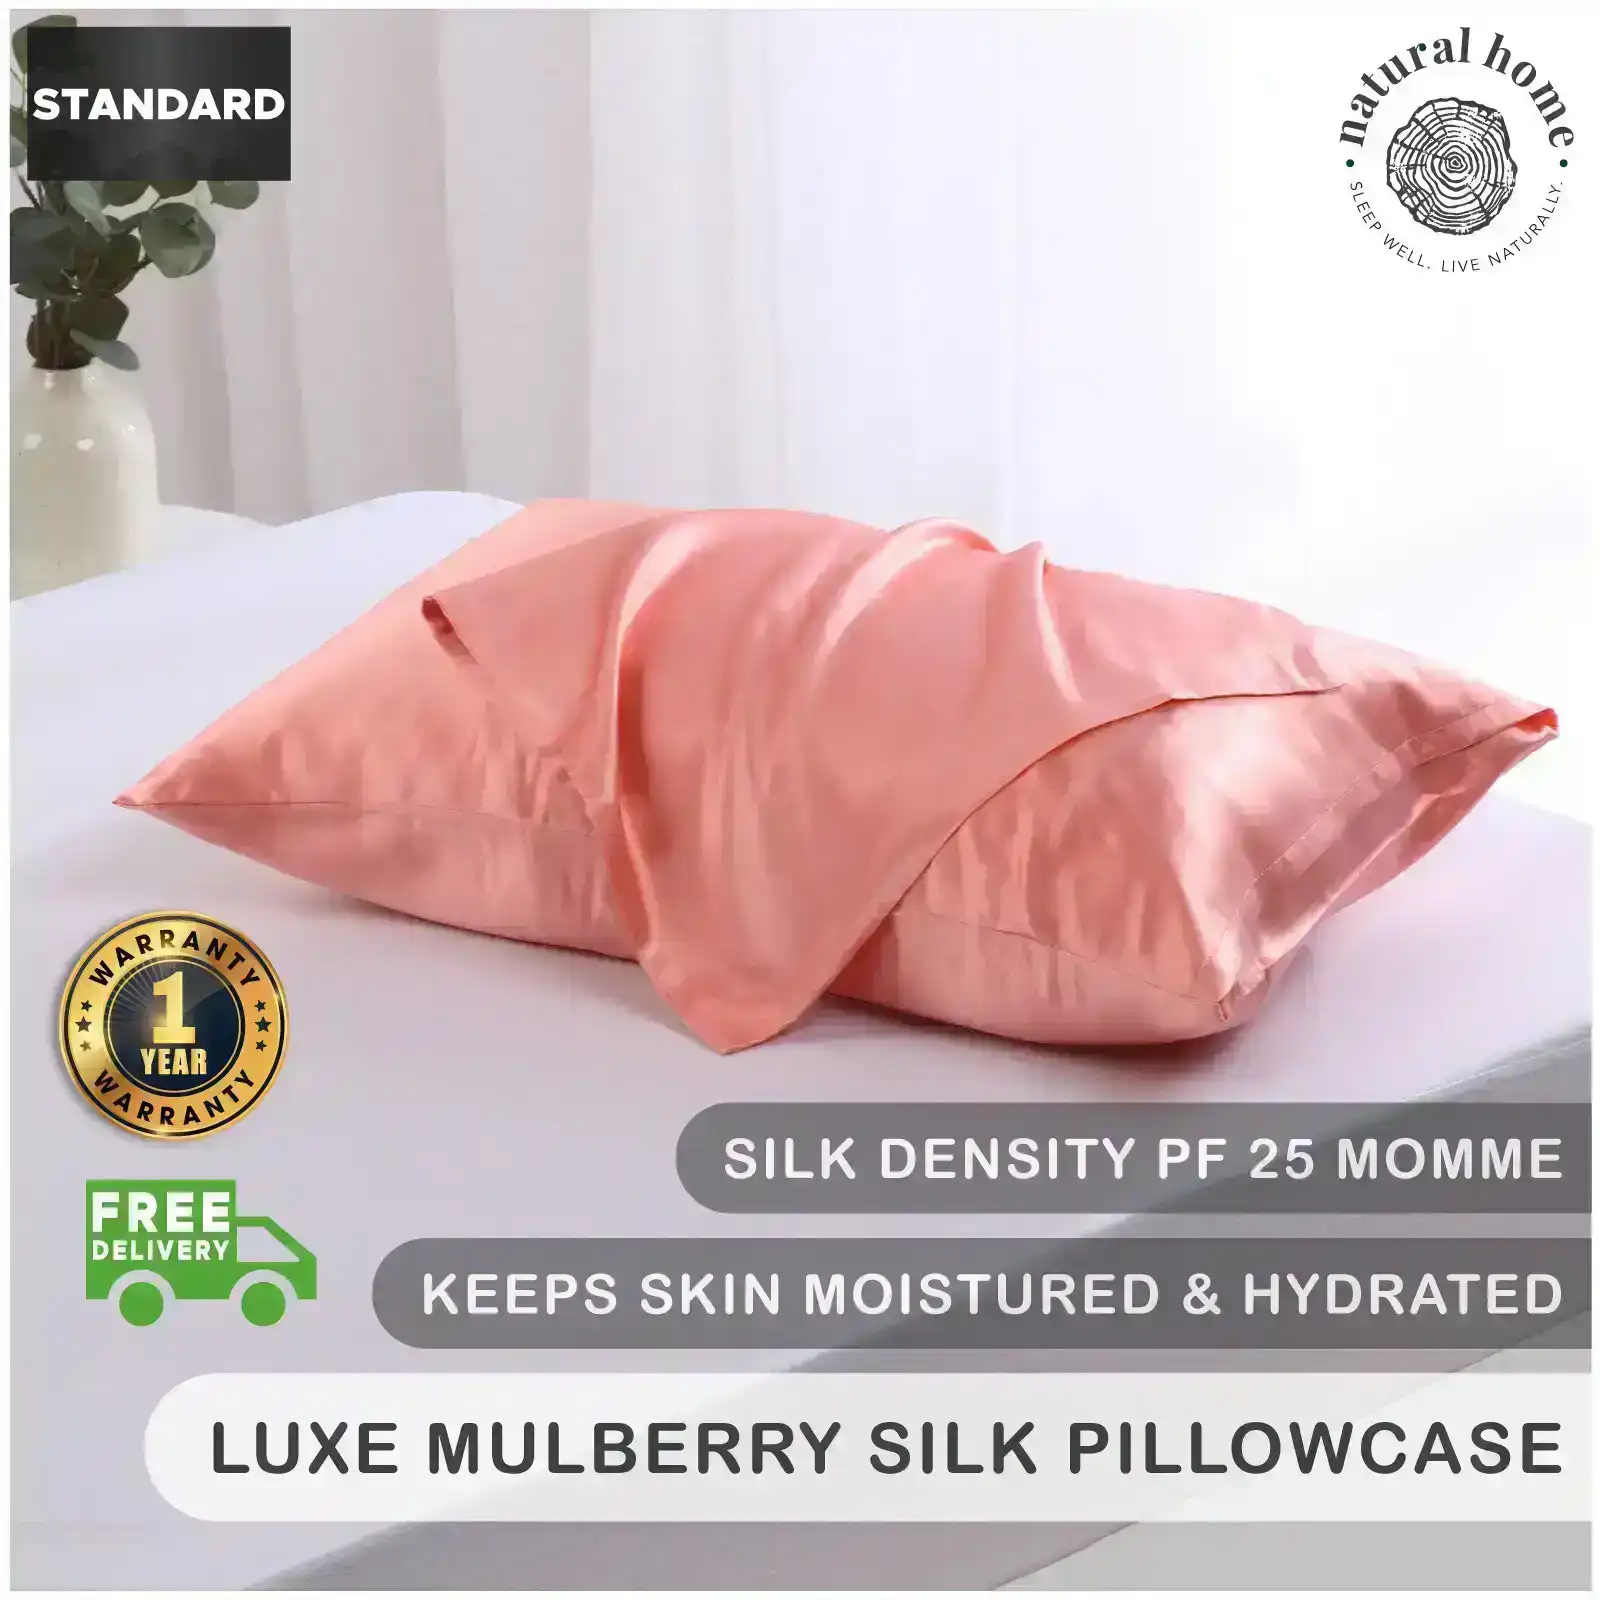 Natural Home Luxe Mulberry Silk Pillowcase 25 Momme Standard Pillowcase 48 x 73cm - Blush